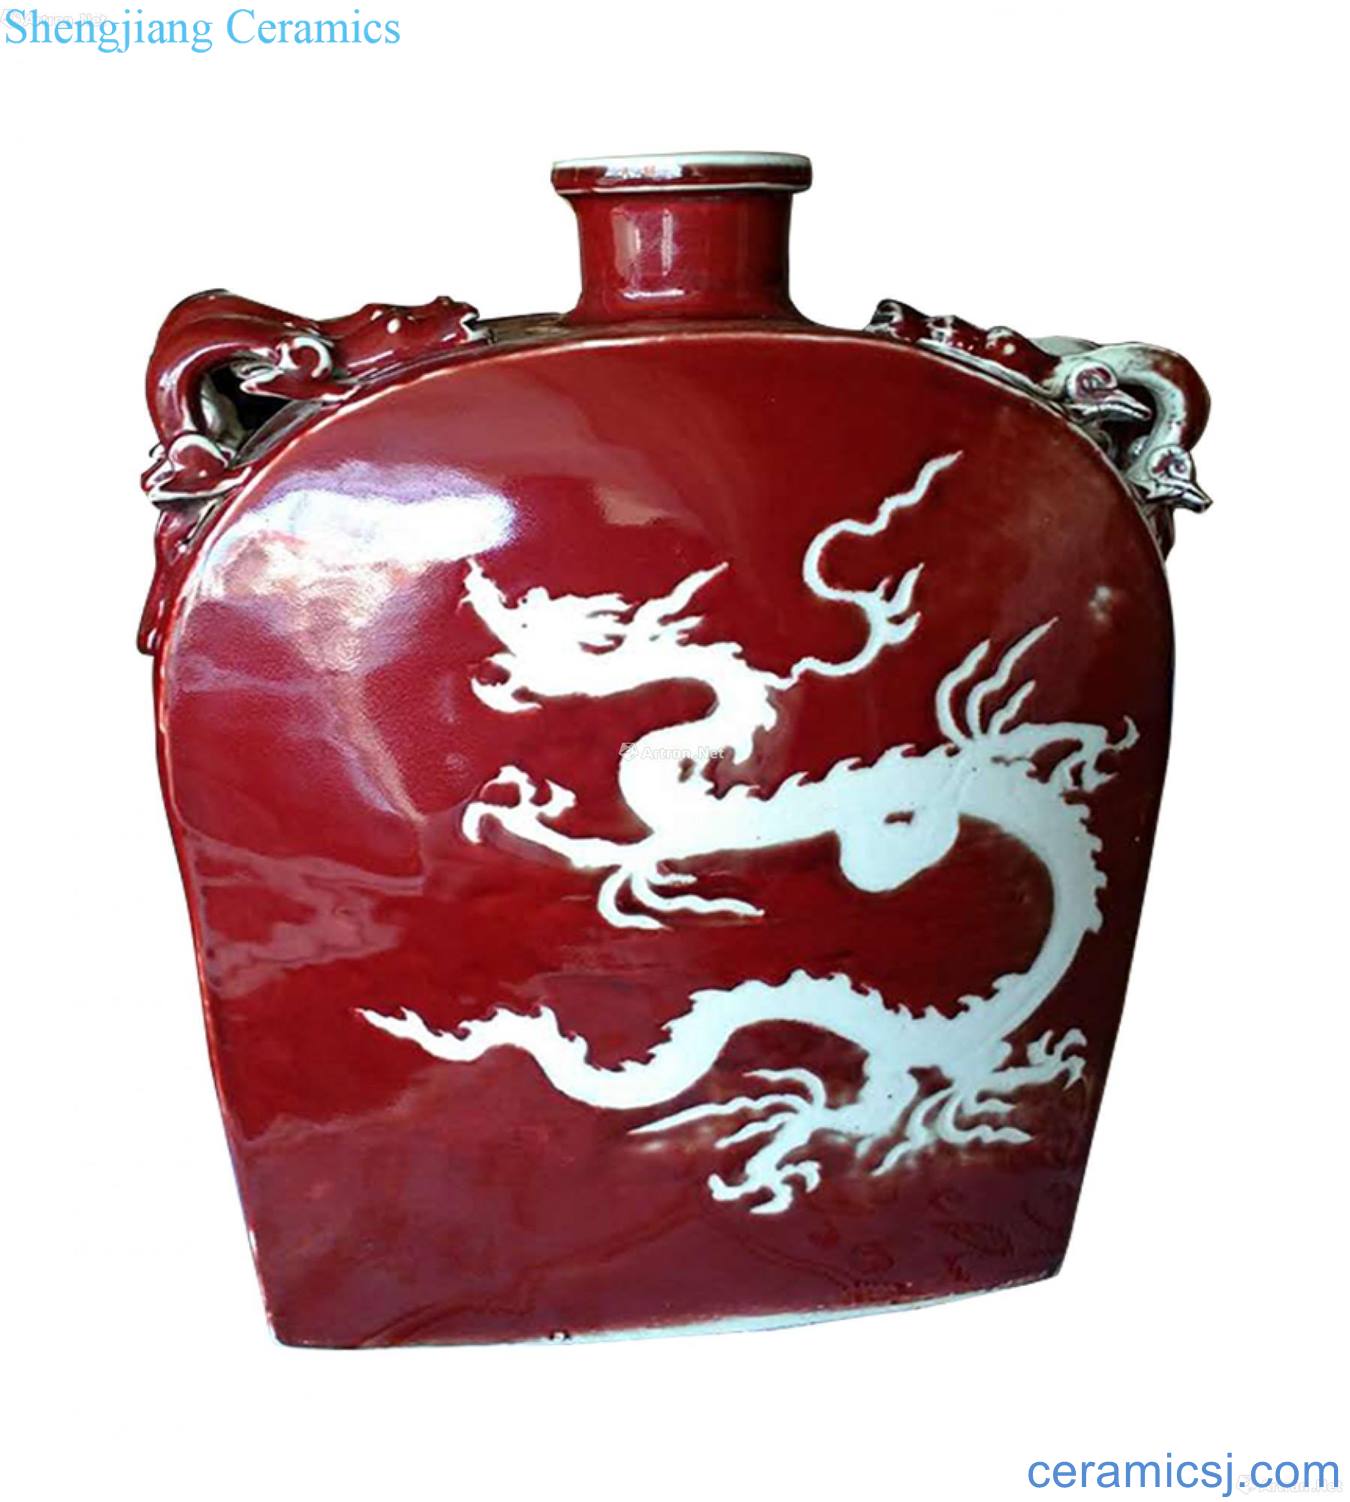 Youligong leave white dragon grain four rectangular flat pot